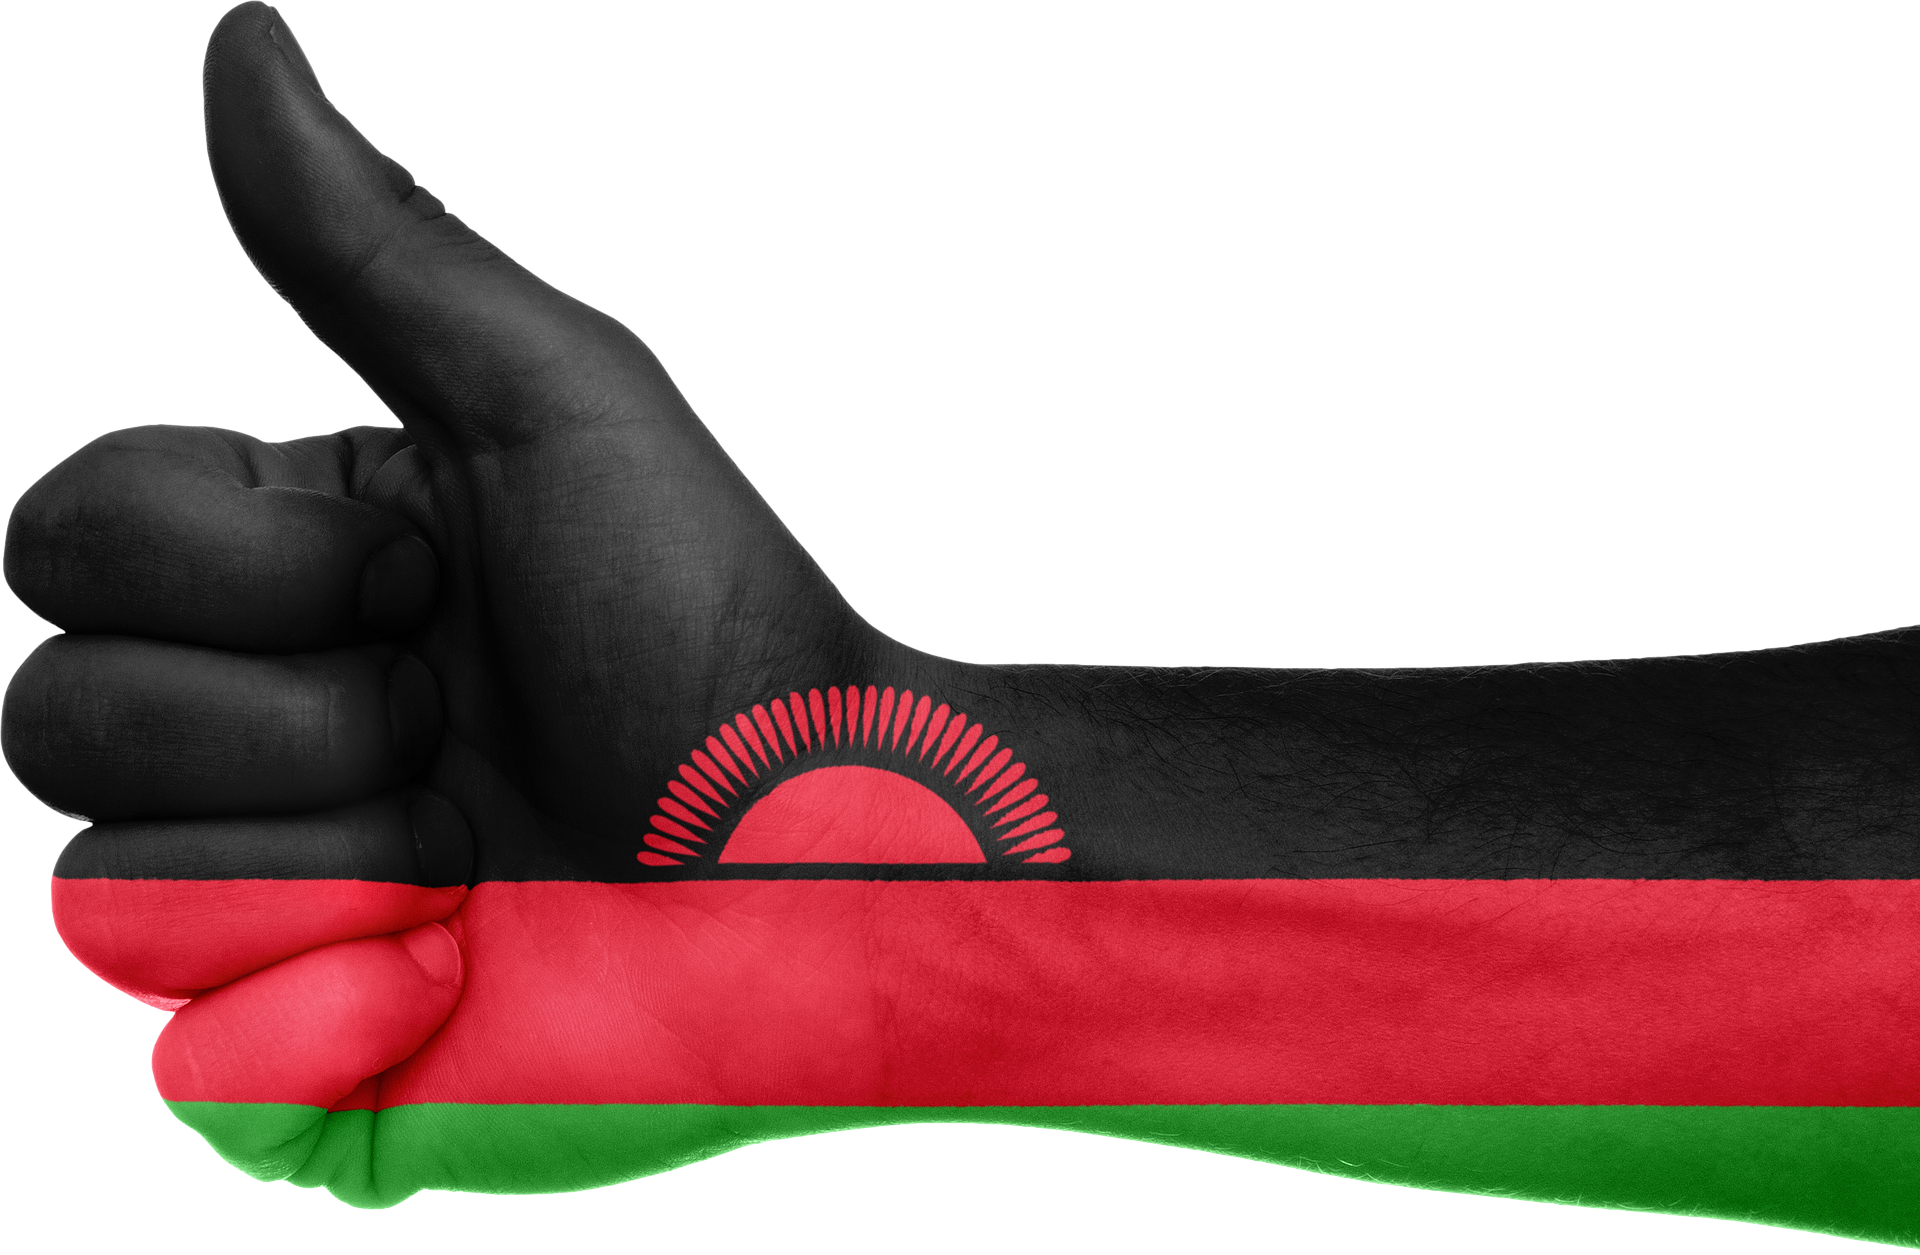 malawi_flag_thumbs_up.png